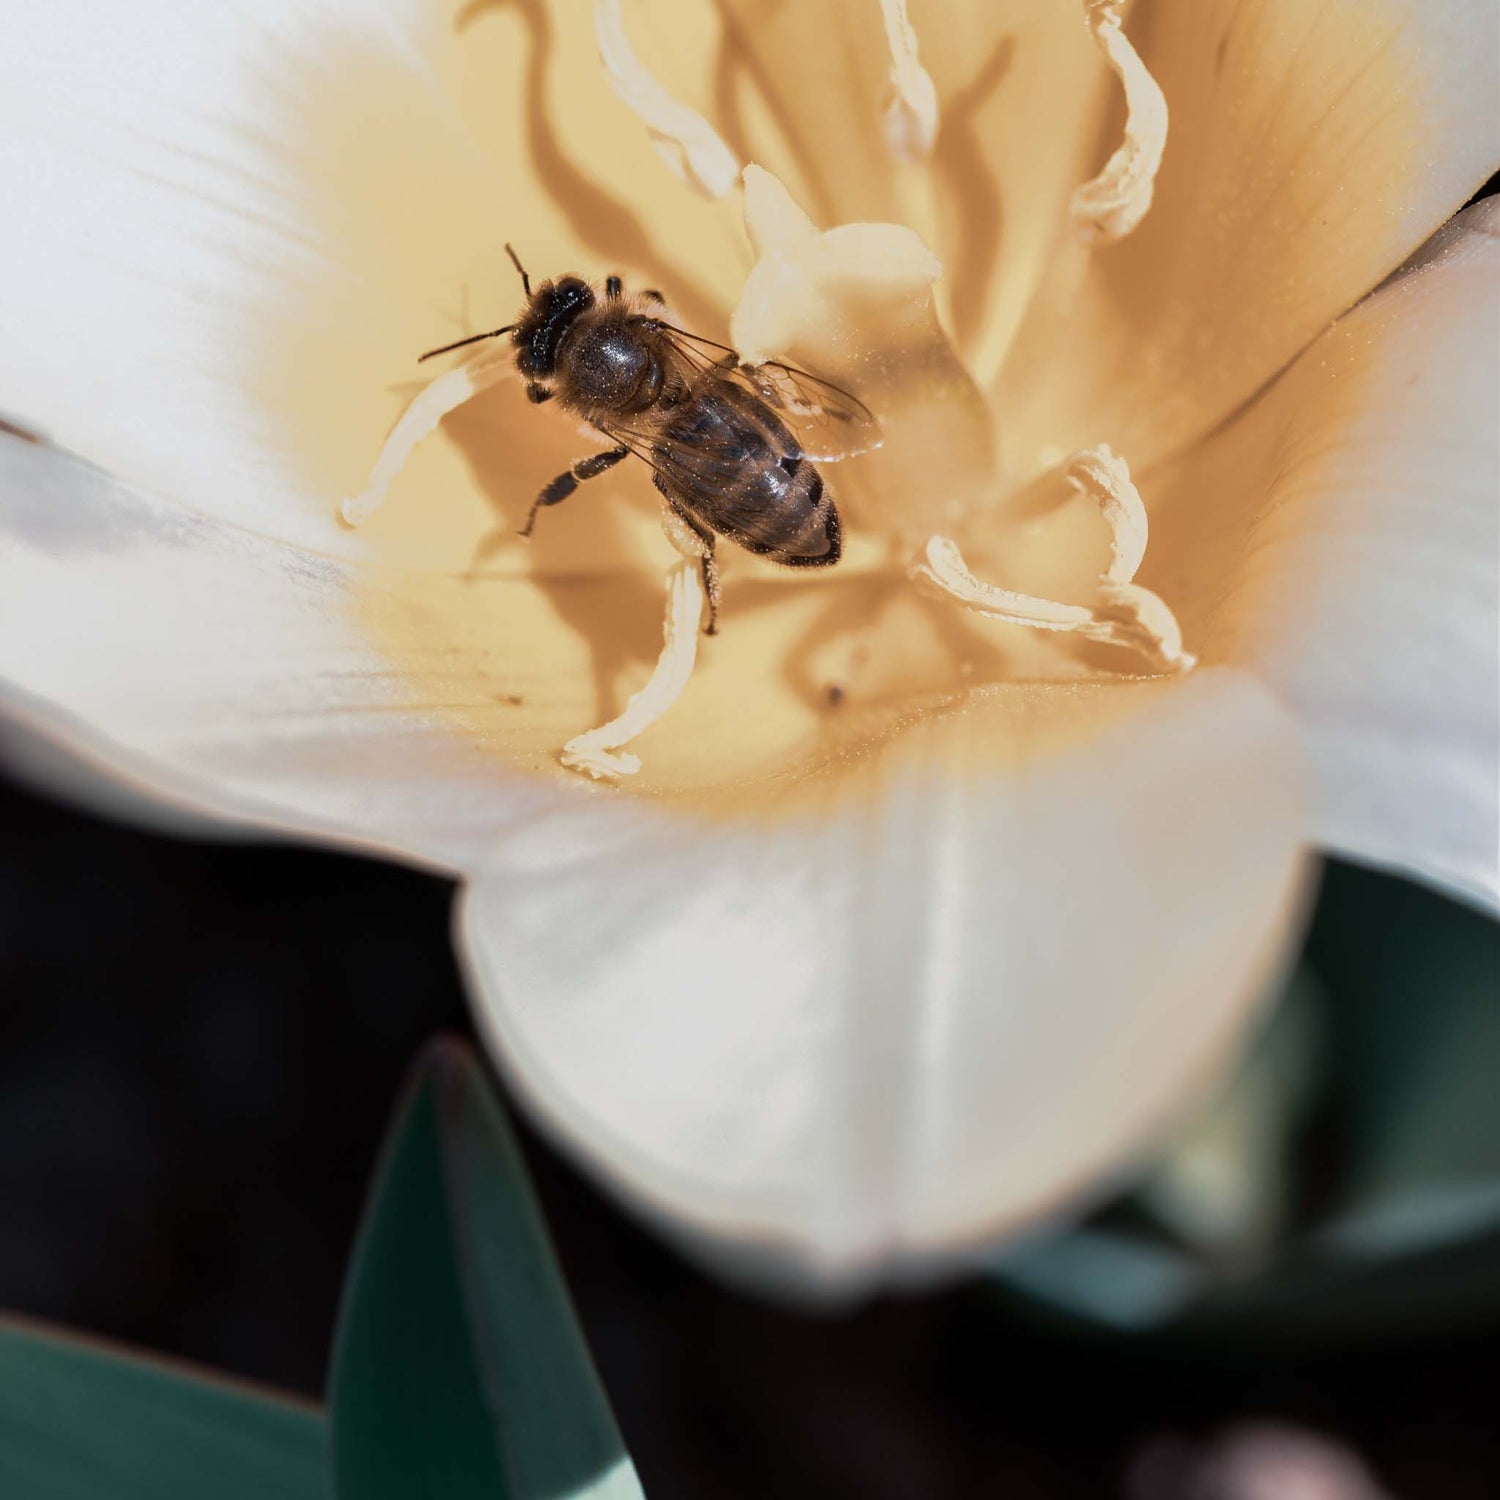 Honeybee on flower drinking nectar.